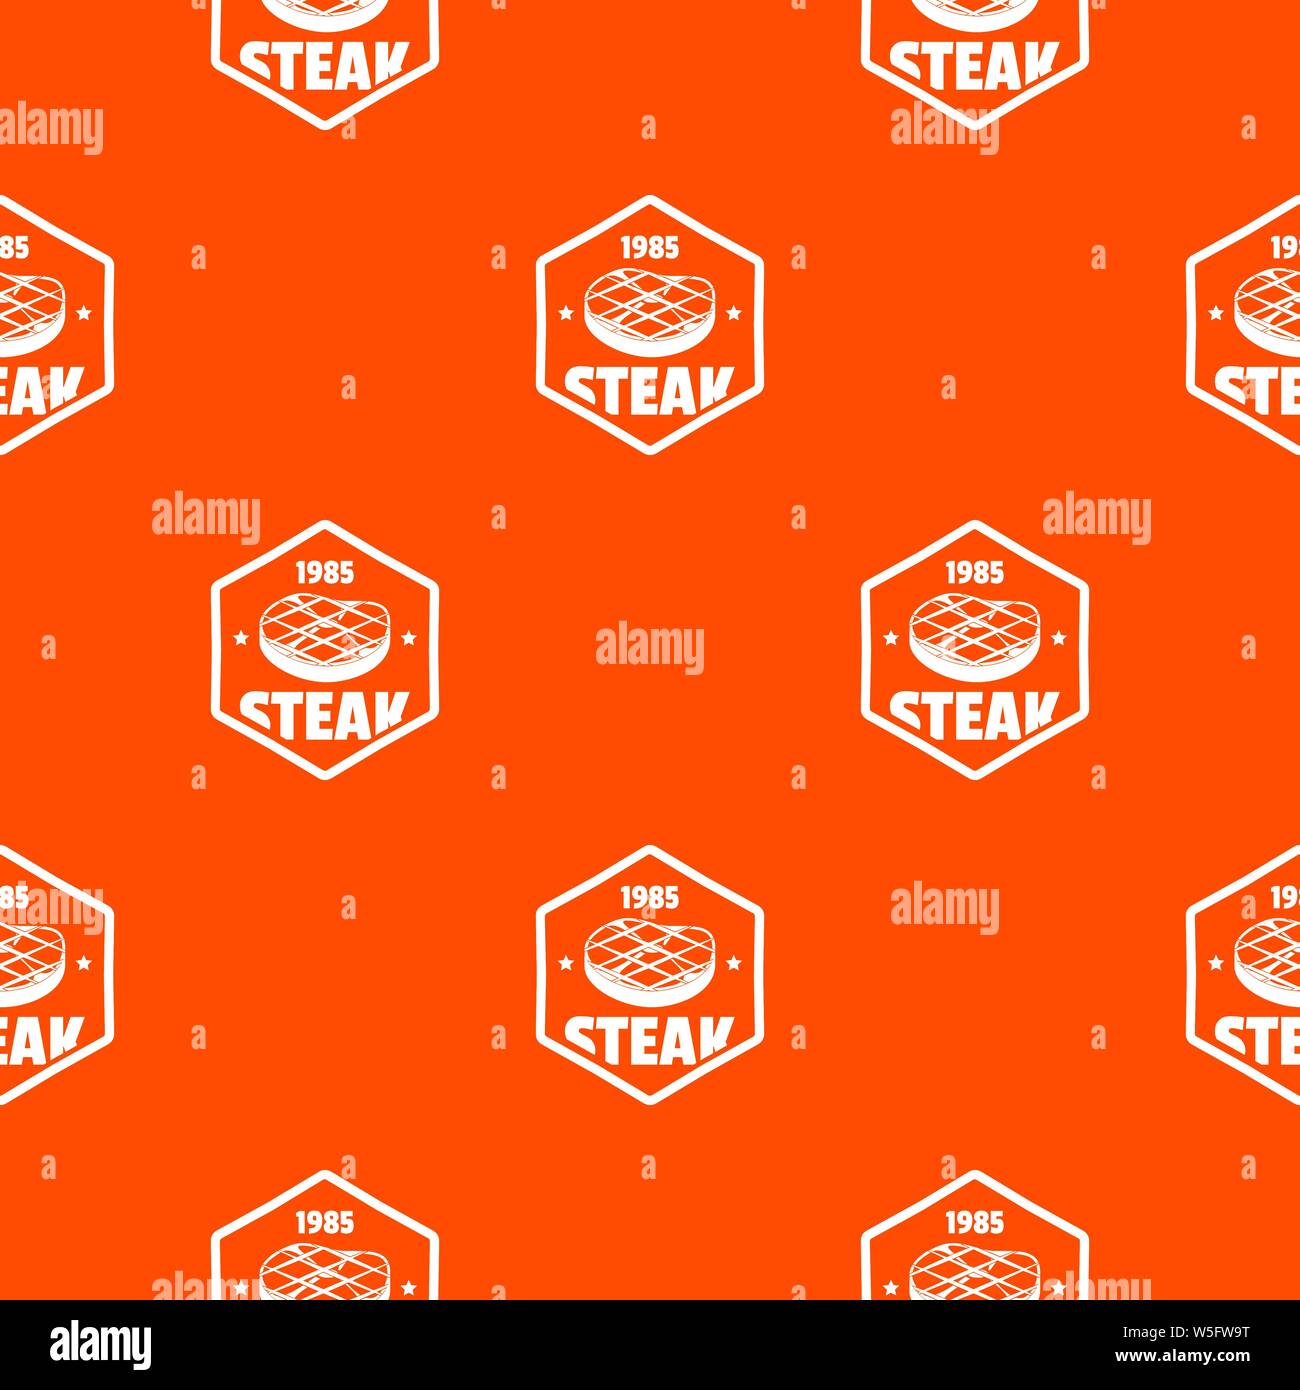 1985 steak pattern vector orange Stock Vector